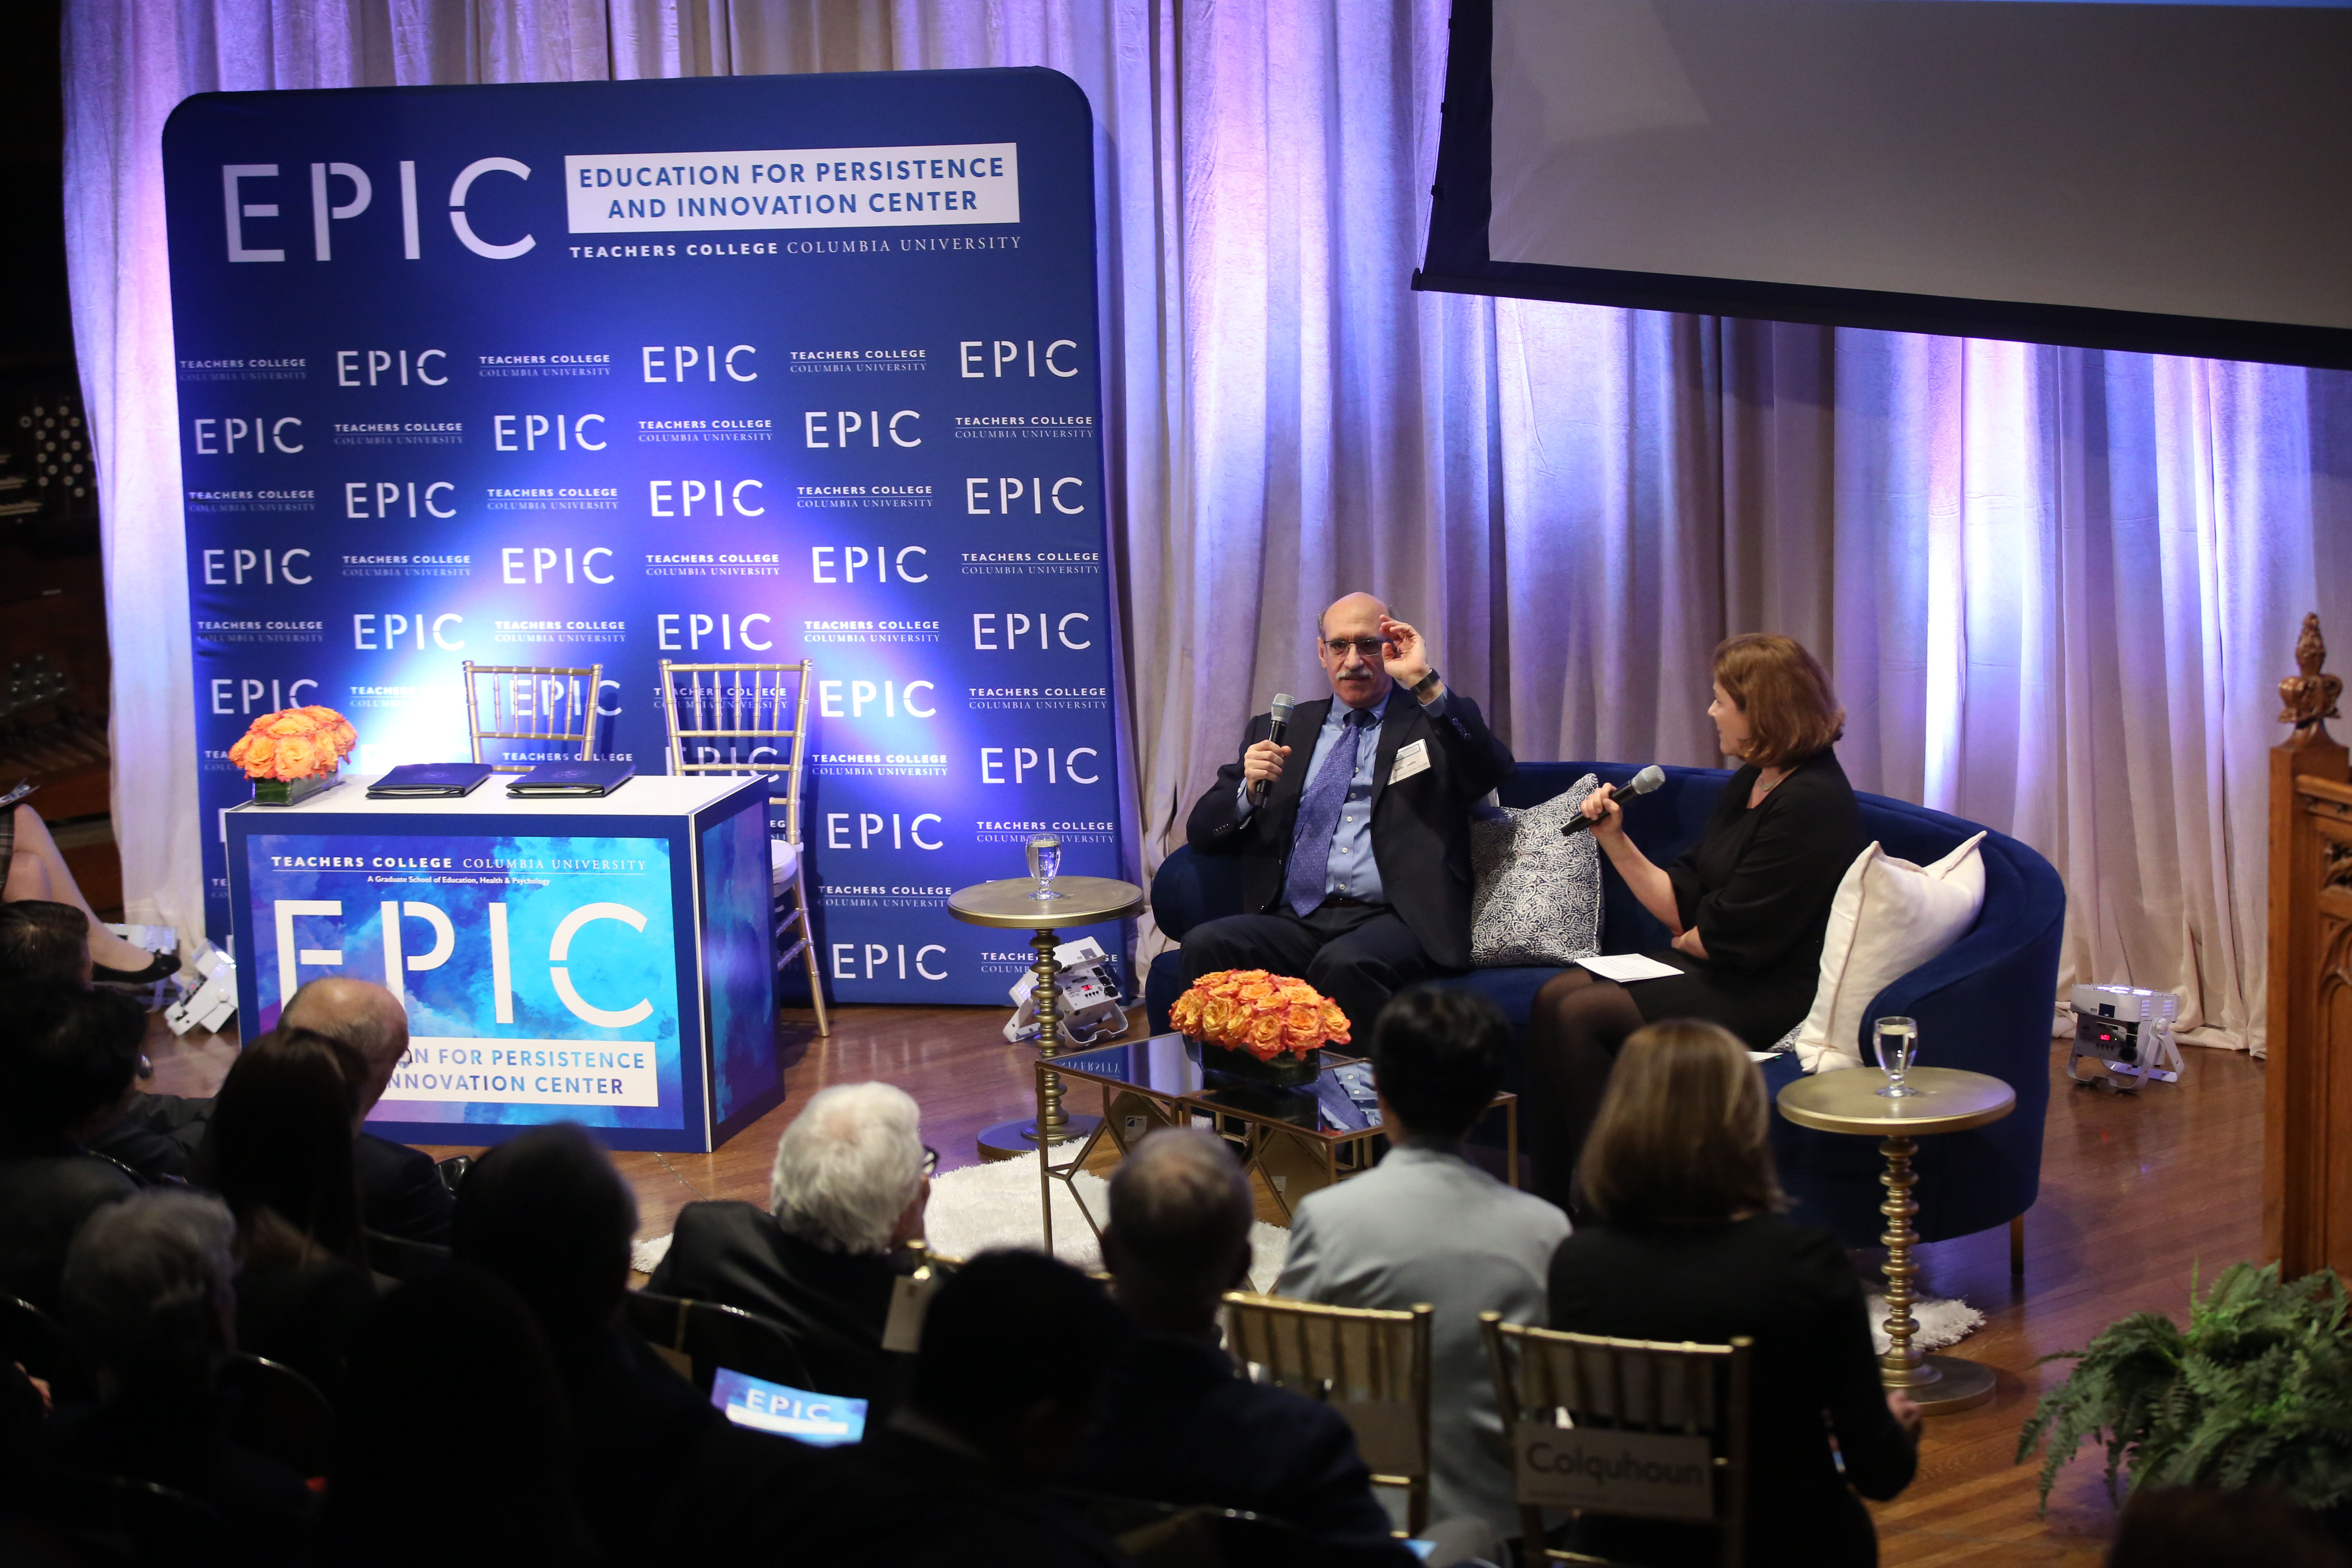 EPIC event panel discussion